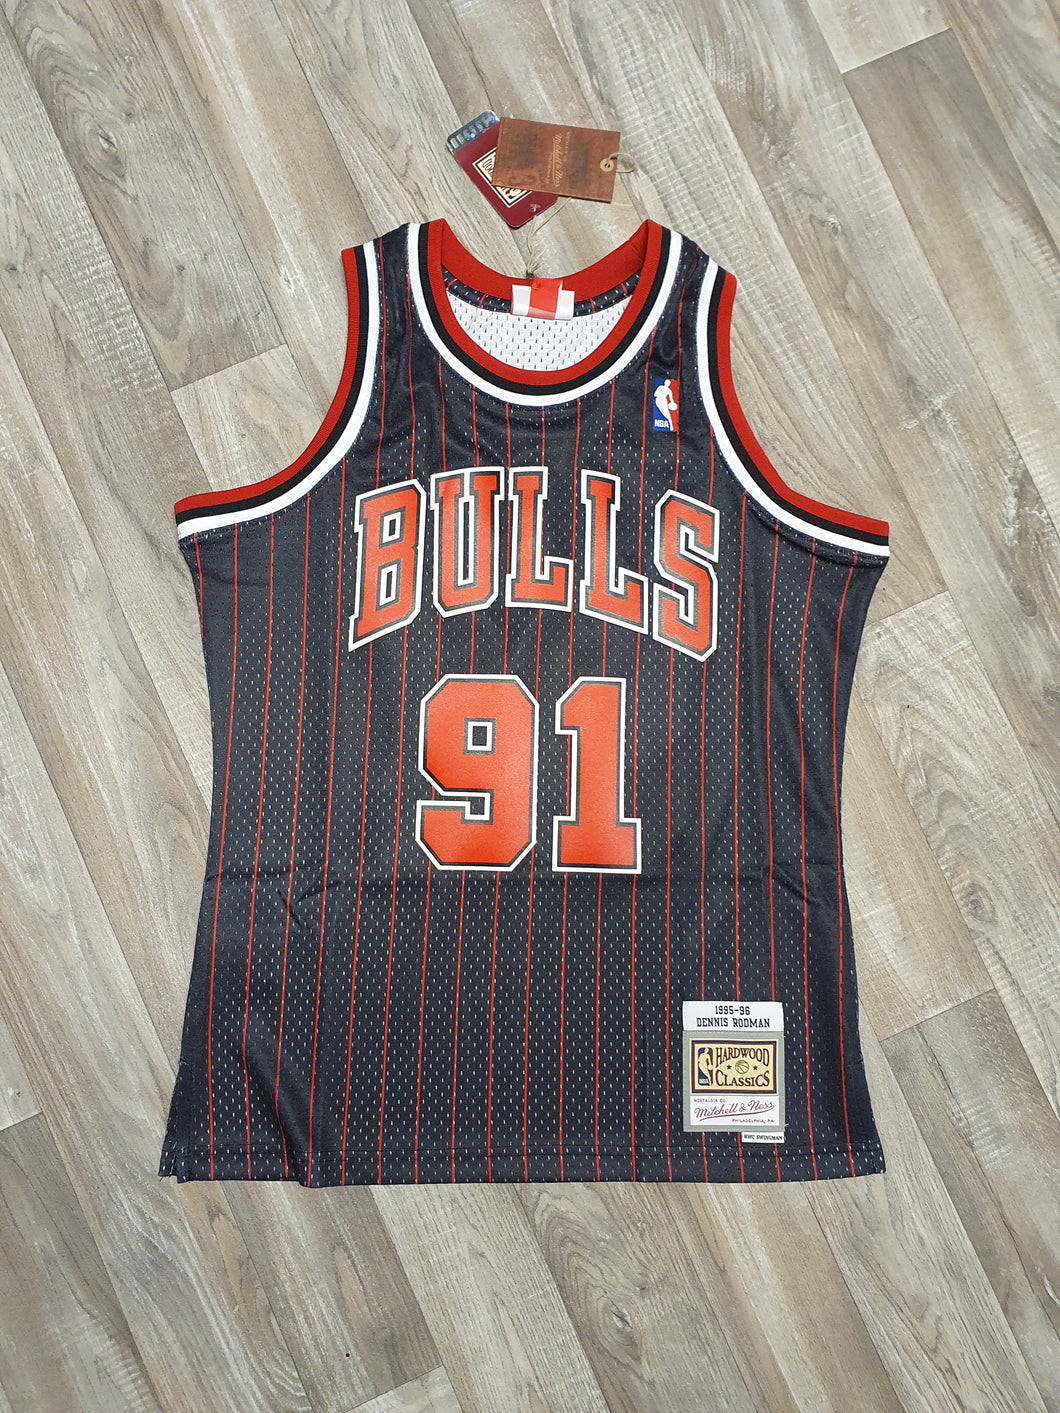 Dennis Rodman Chicago Bulls 1995-96 Jersey